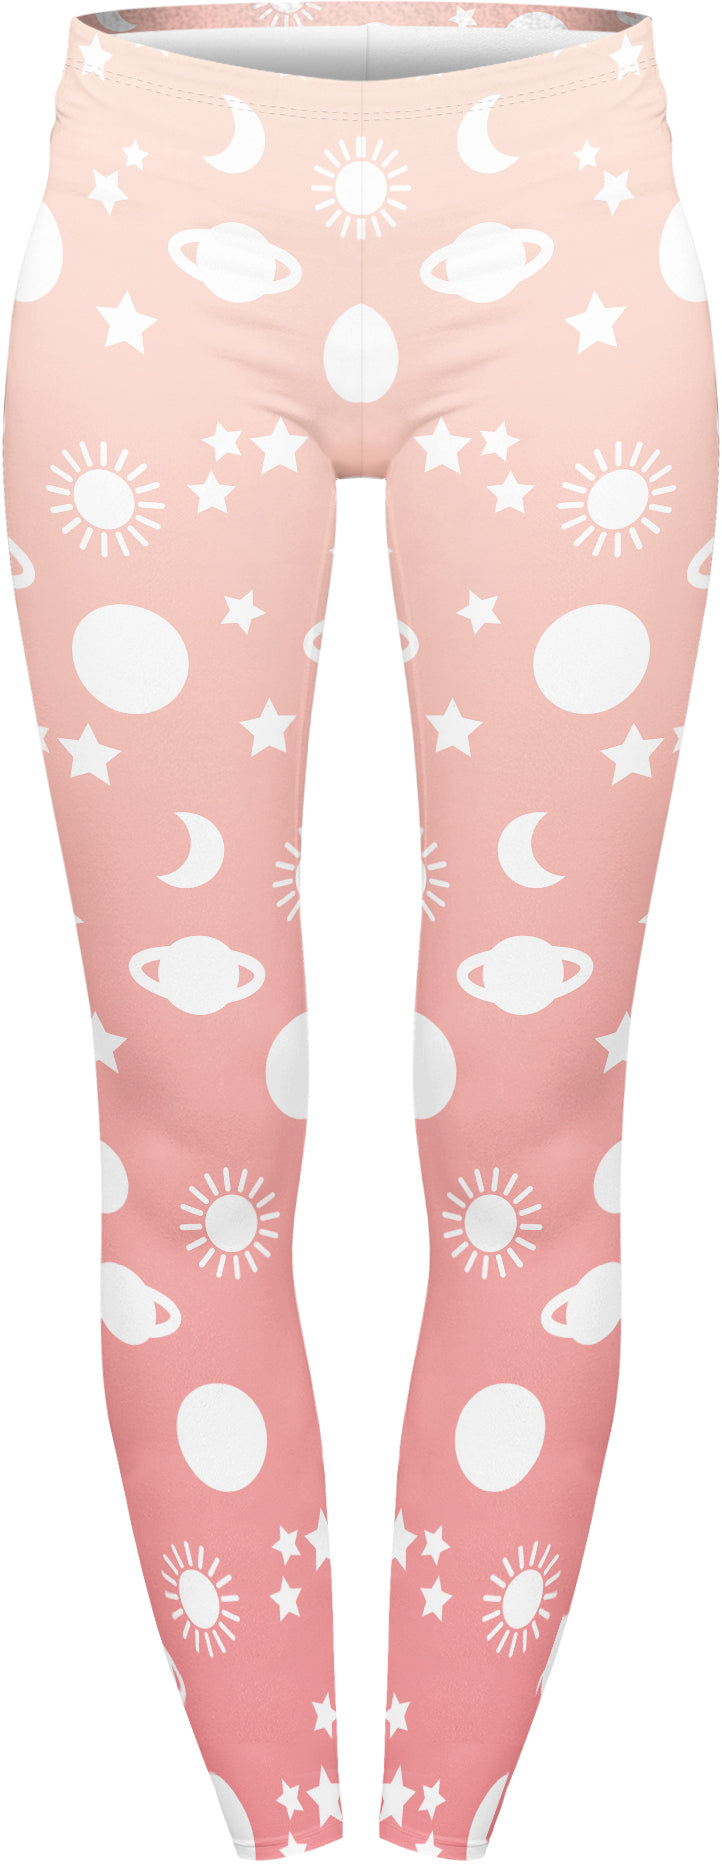 Regular Leggings (8-12 UK Size) - Cute Pink Planets